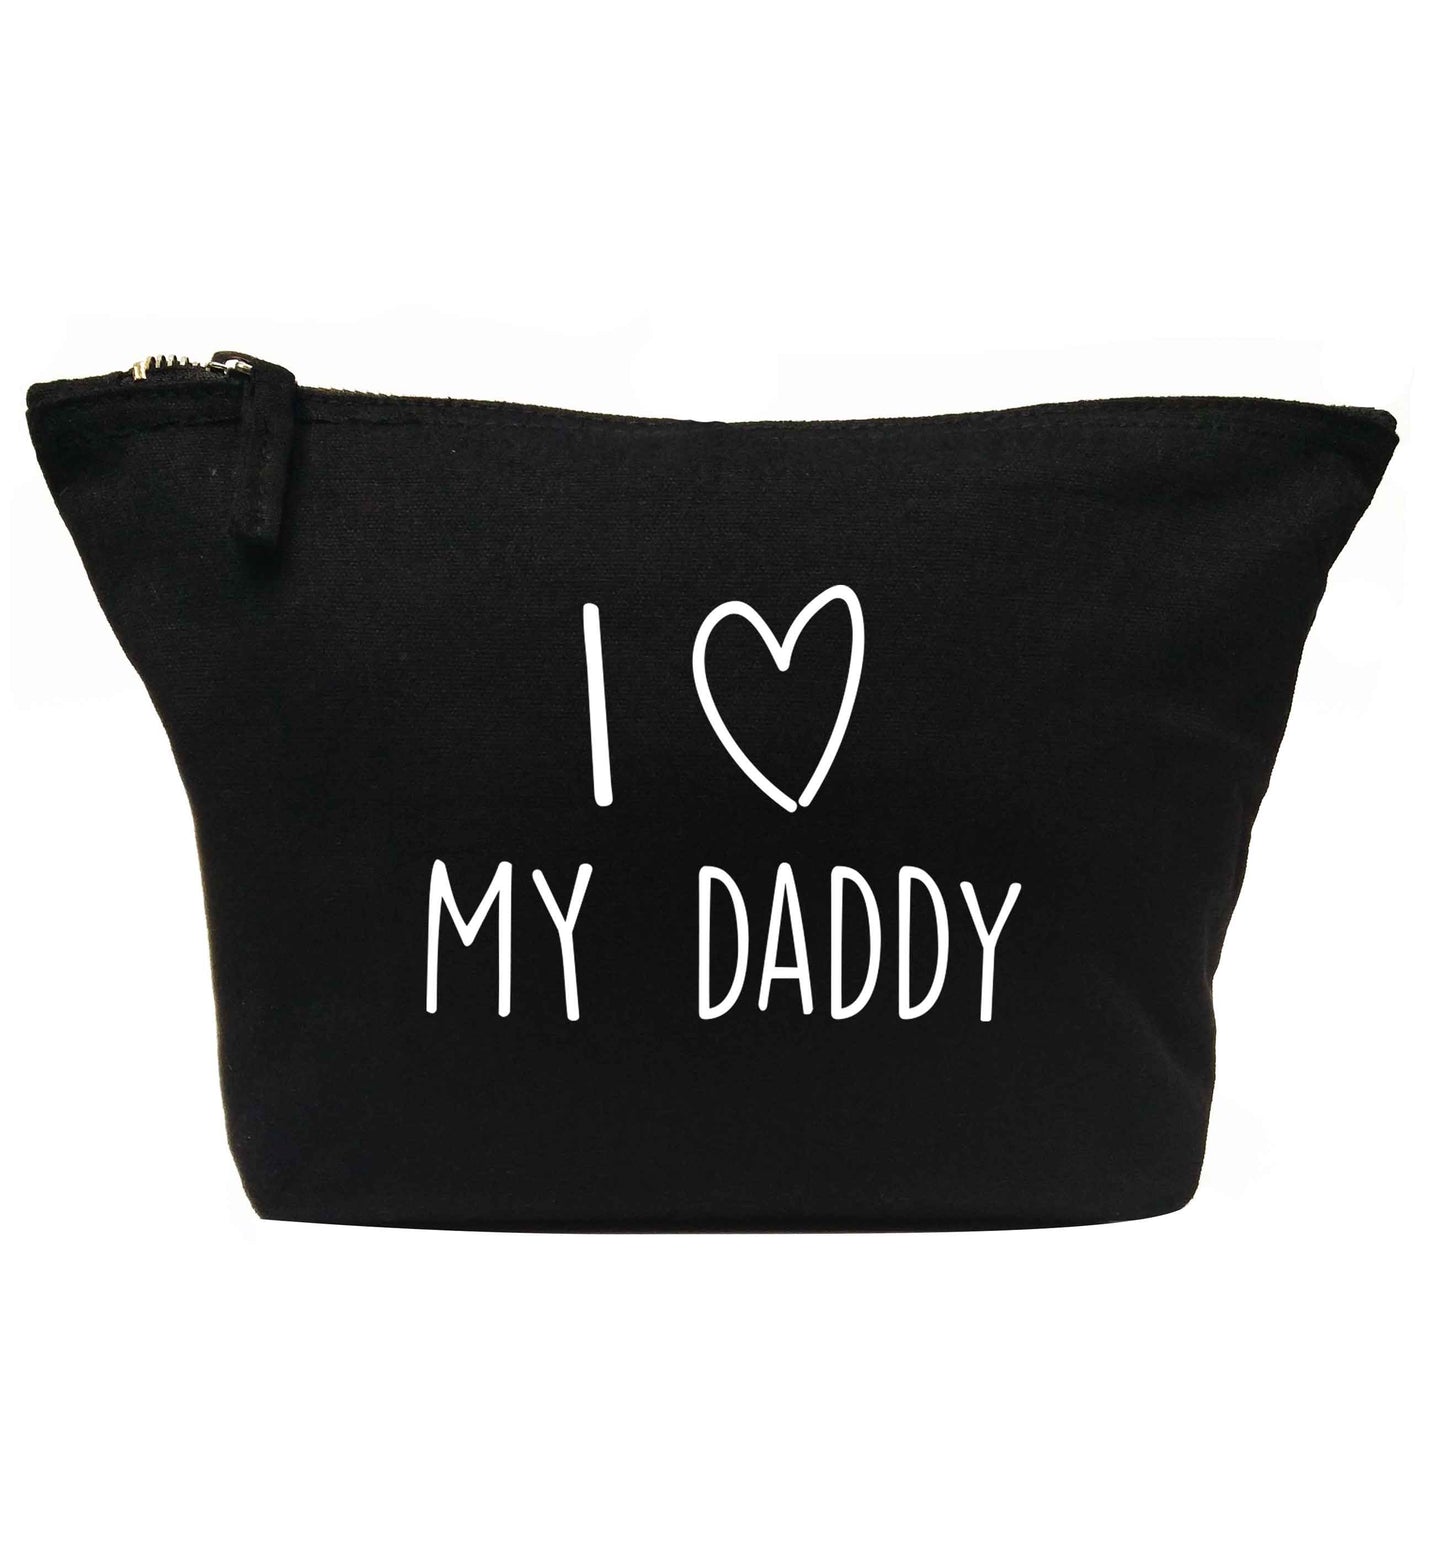 I love my daddy | Makeup / wash bag